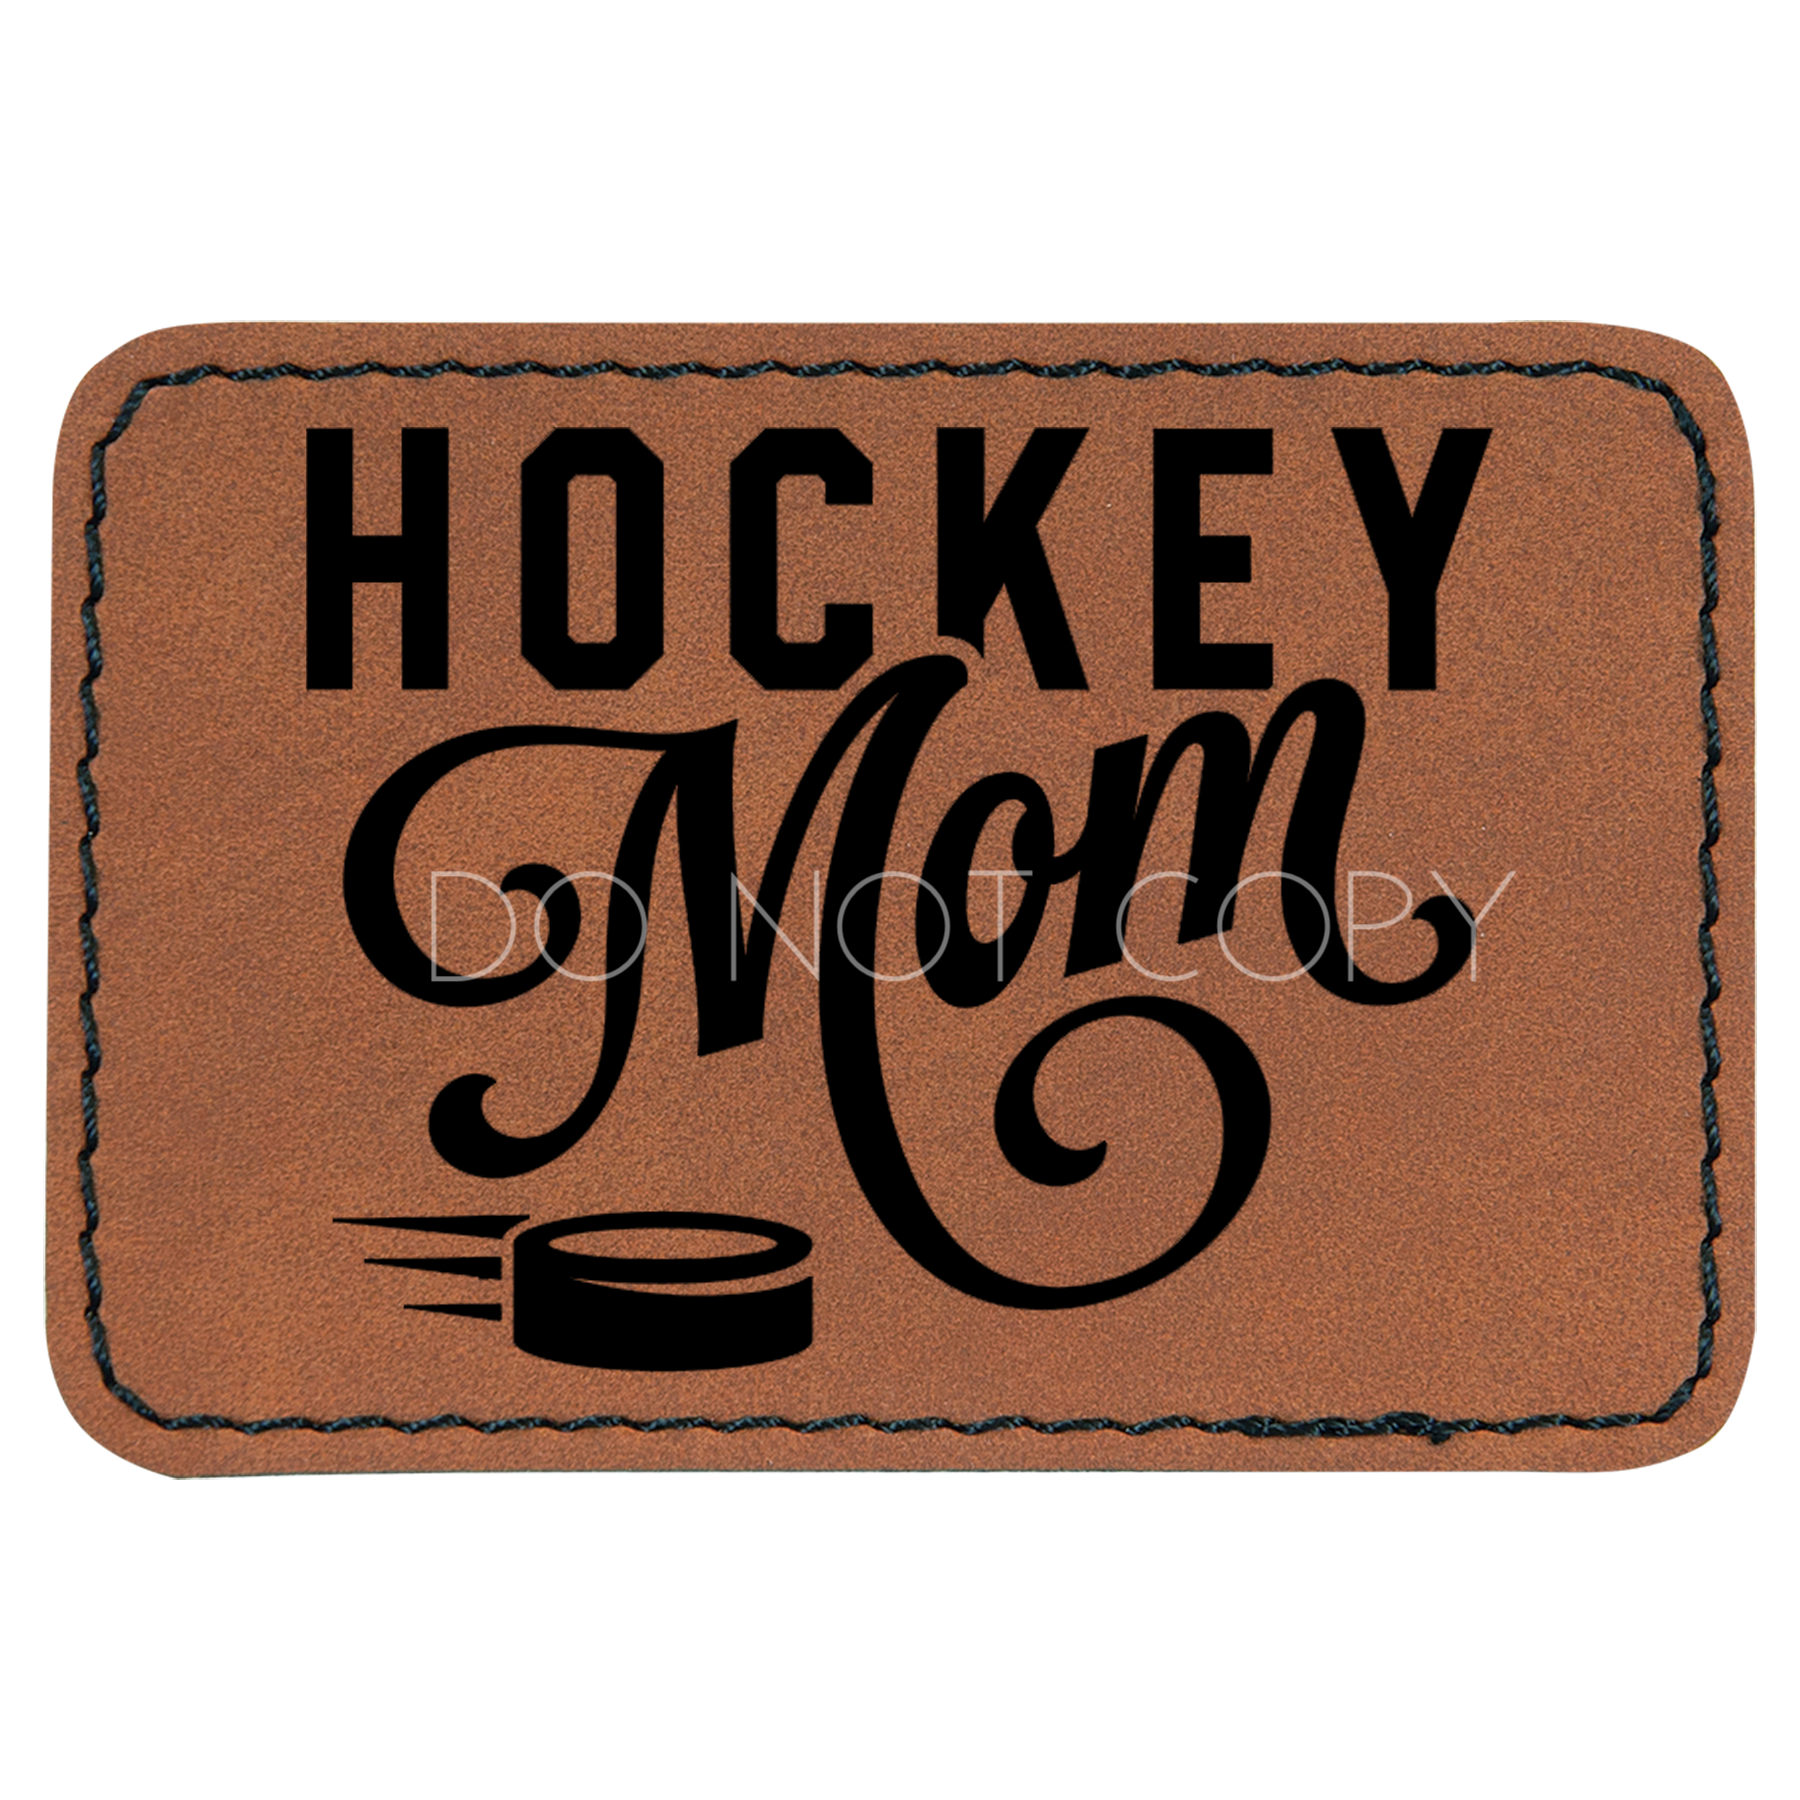 Hockey Mom Puck Patch